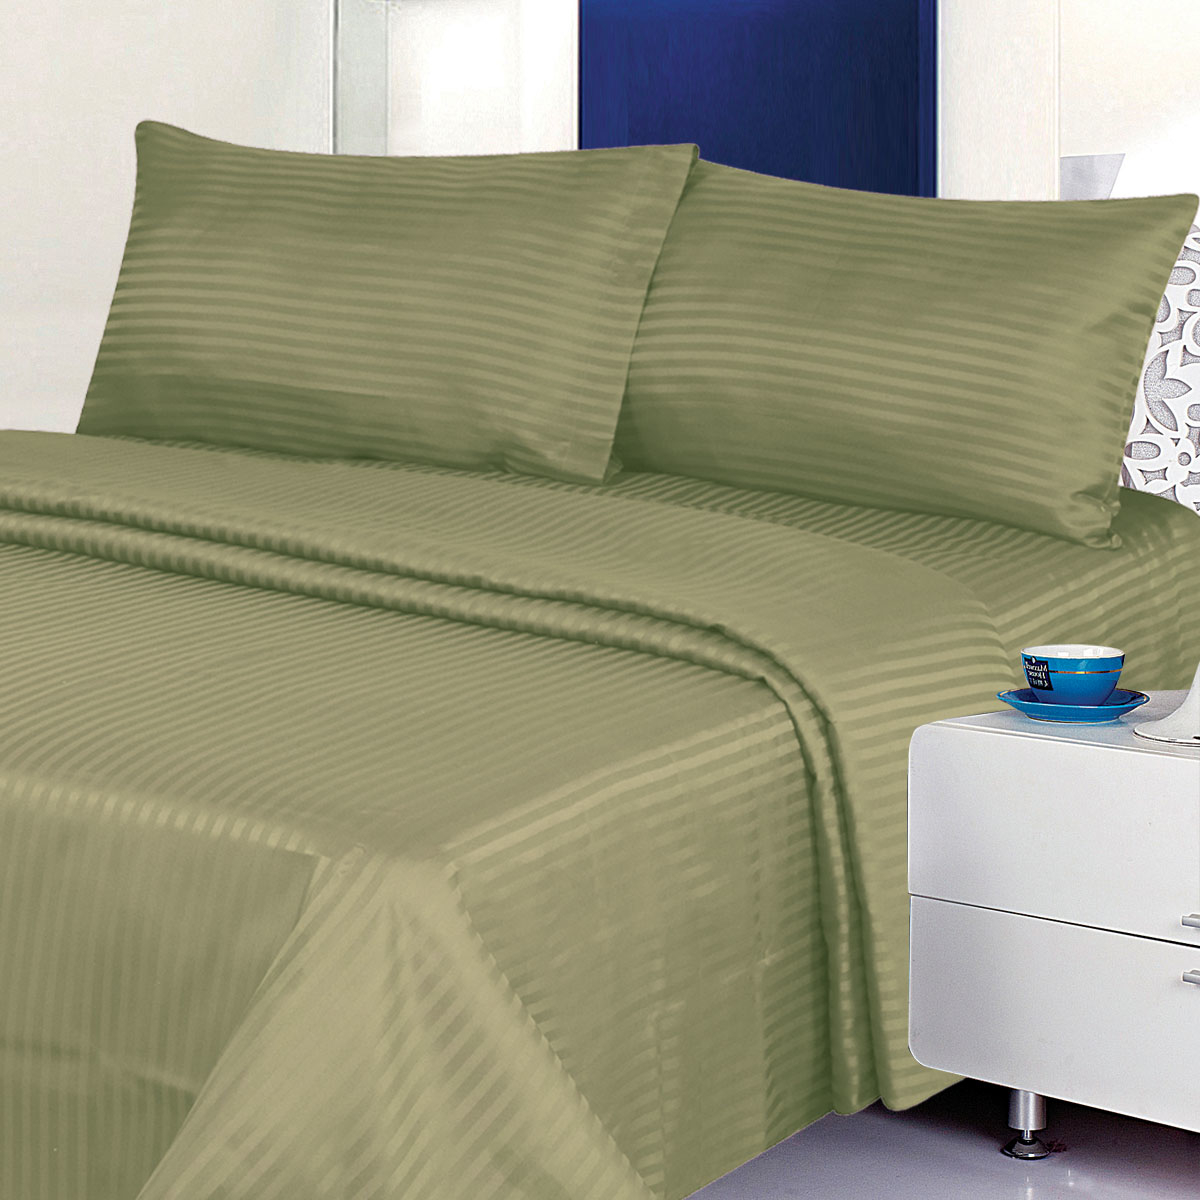 Deluxe 6PC Classic Cotton-Blend Sateen Dobby Stripe Bed Sheet Set - King, Light Blue